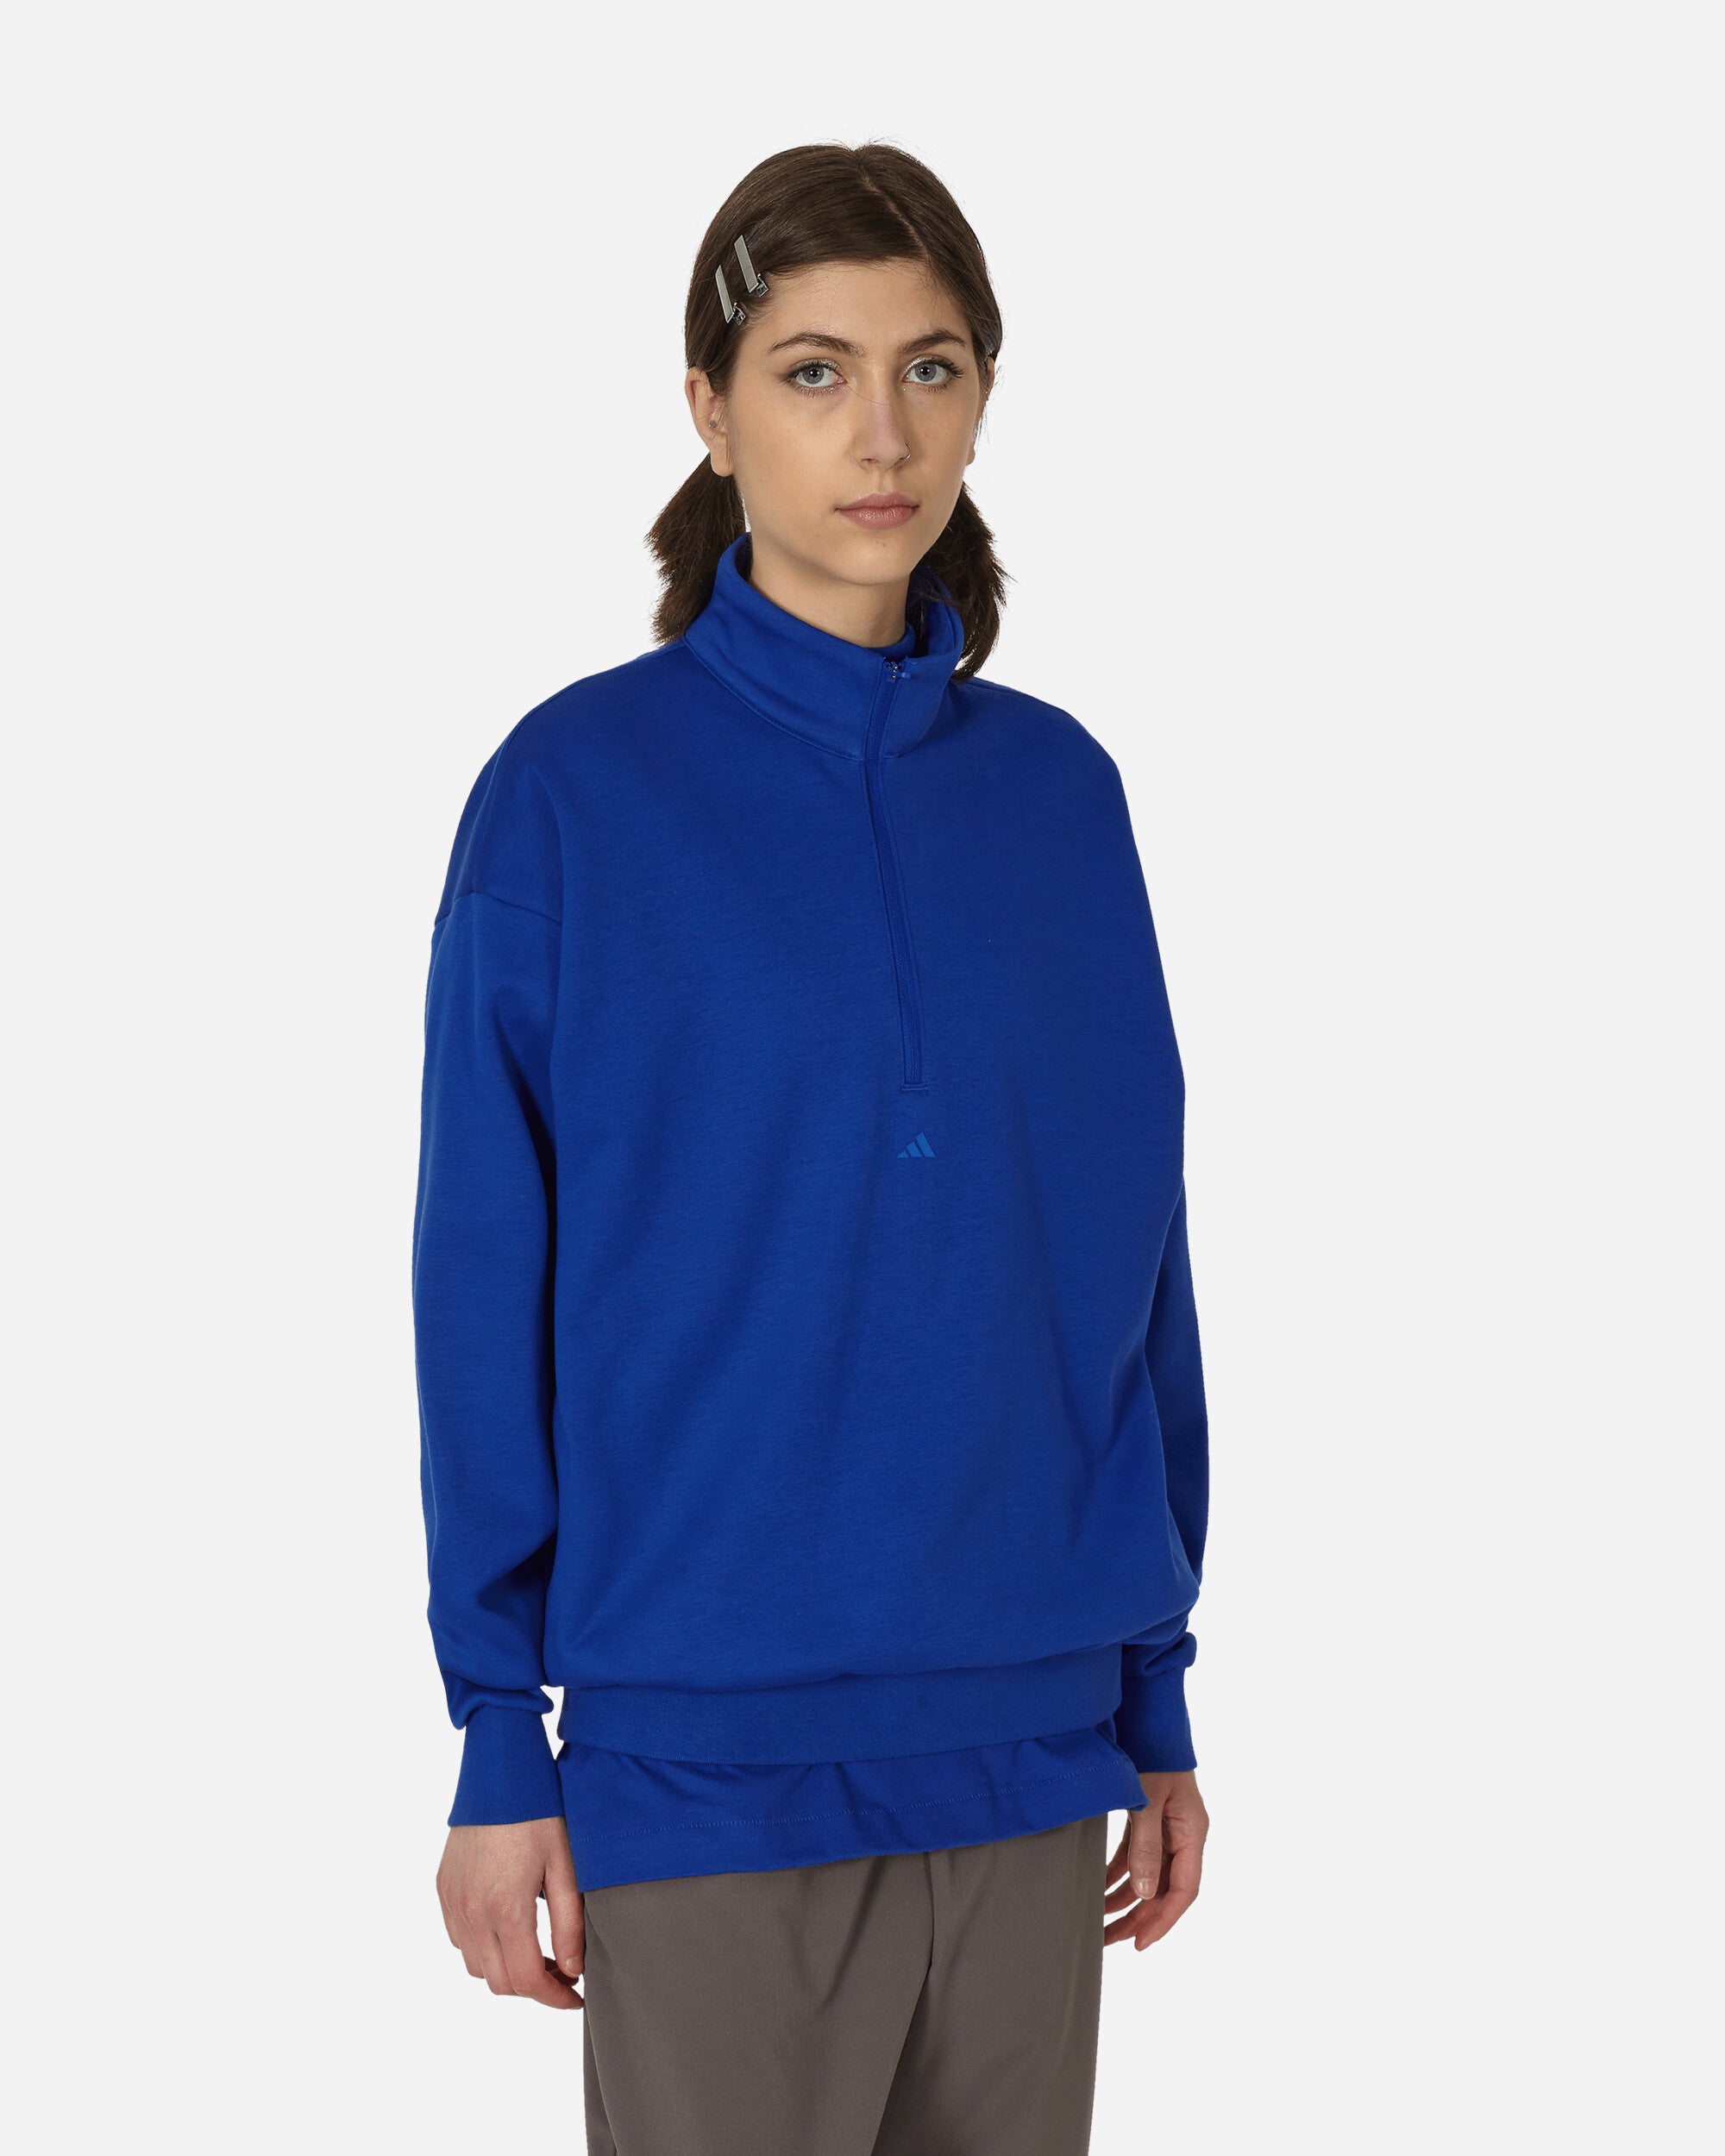 adidas Adi Bb 1/2 Zip Lucid Blue Sweatshirts Crewneck IW1624 001